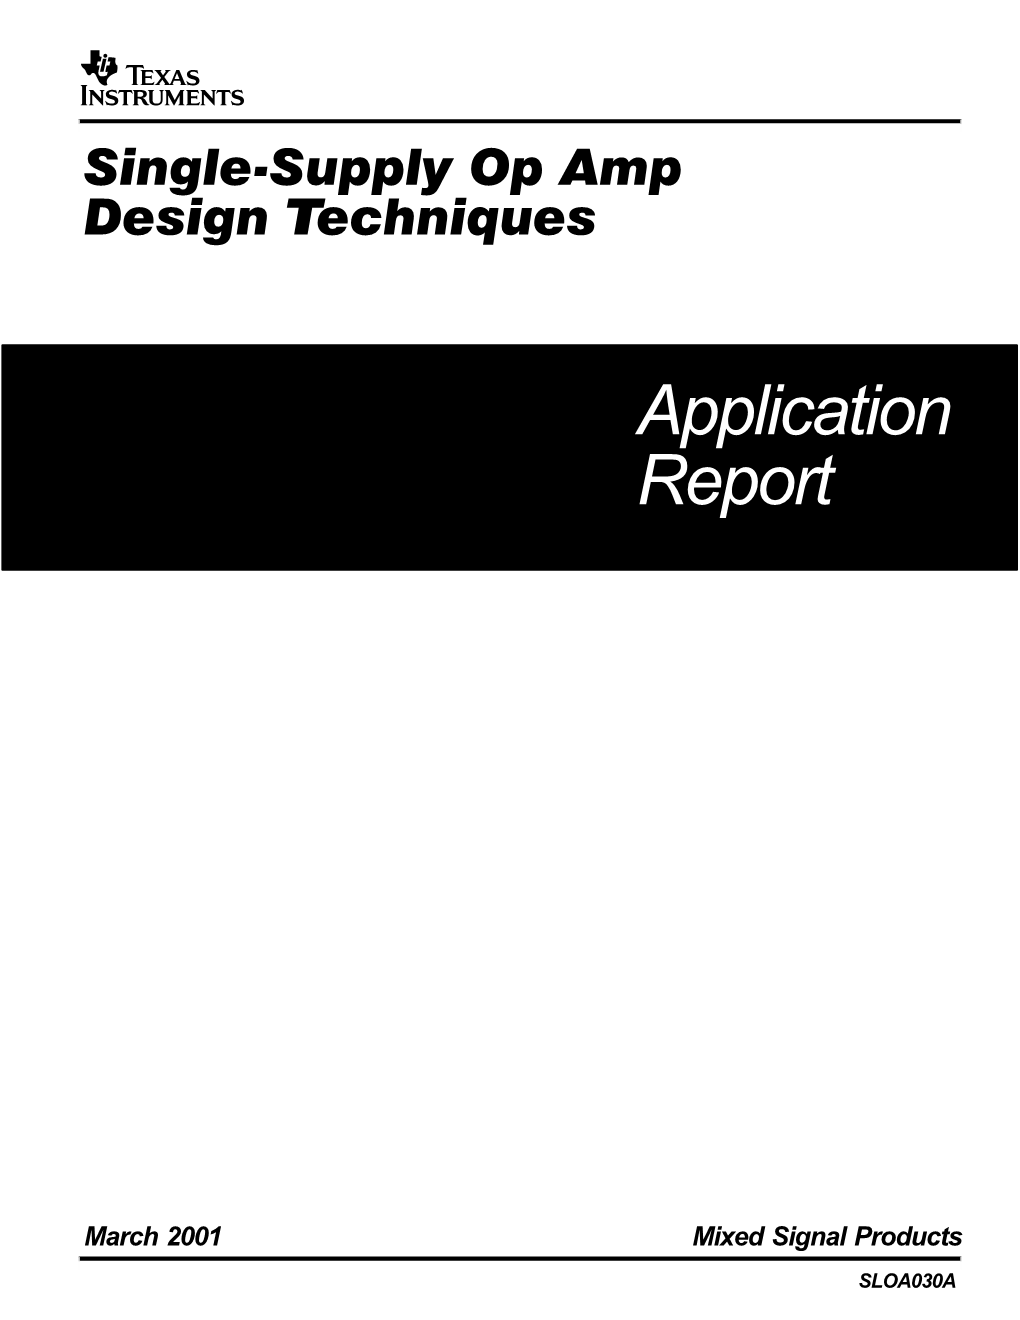 "Single-Supply Op Amp Design Techniques"